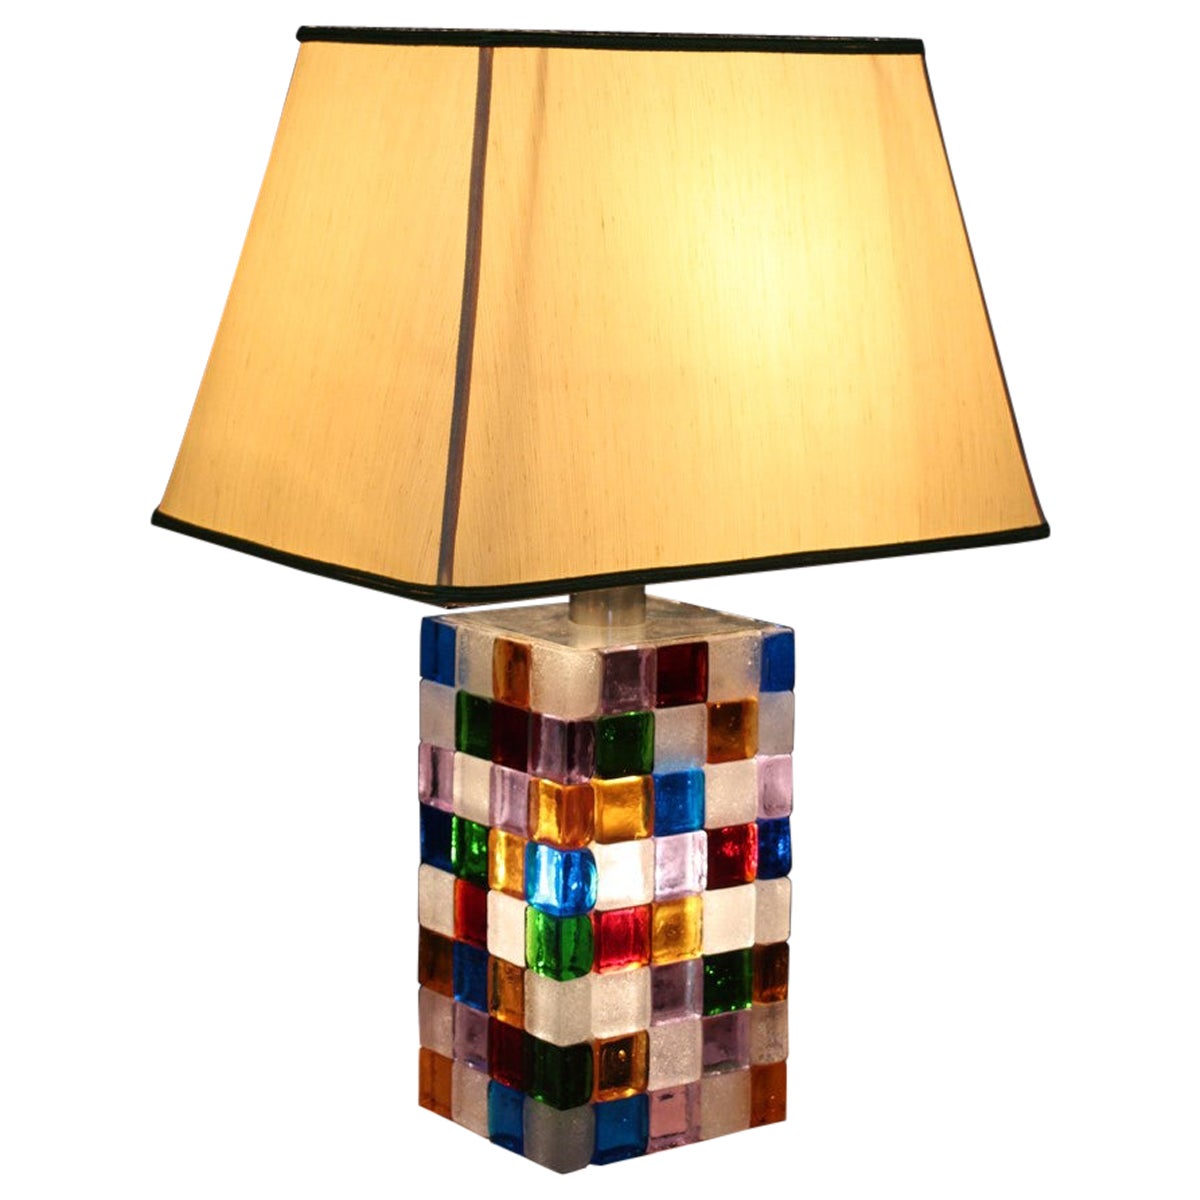 Colored Table Lamp Flavio Poli for Poliarte 1970s Italian Design Pop Art For Sale